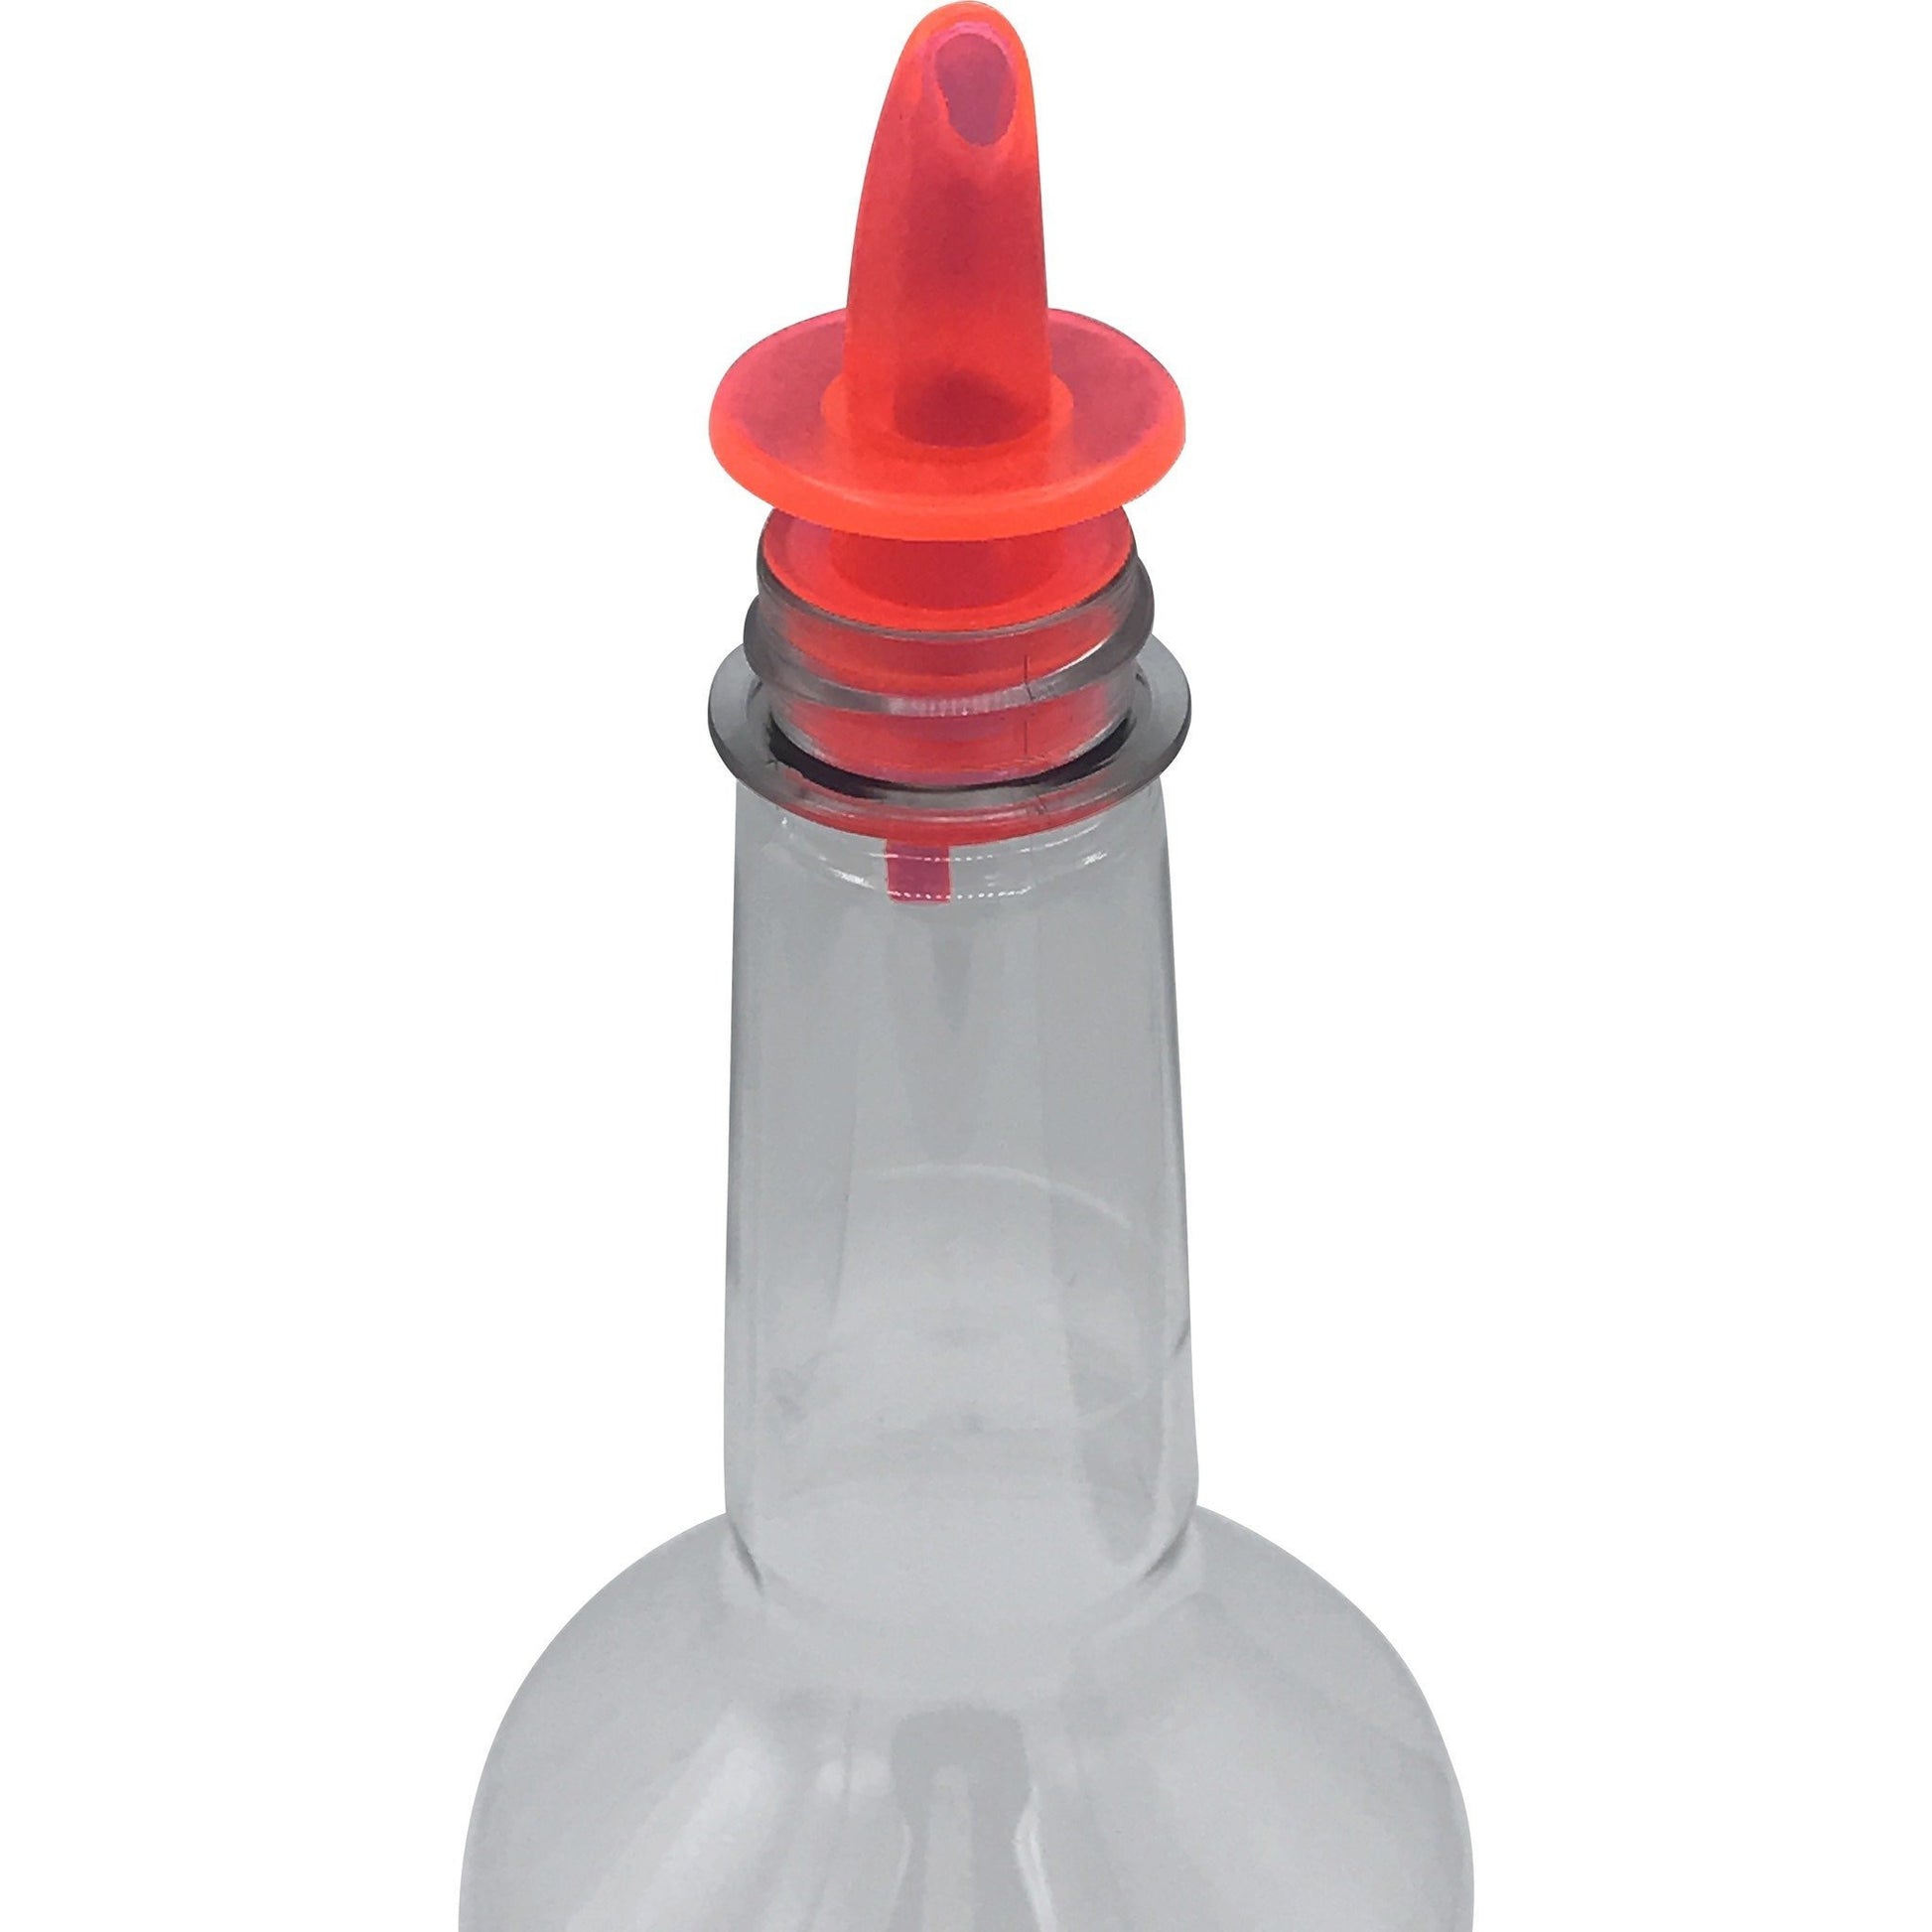 Plastic Pouring Bottle Spouts-BPA Free - IcySkyy